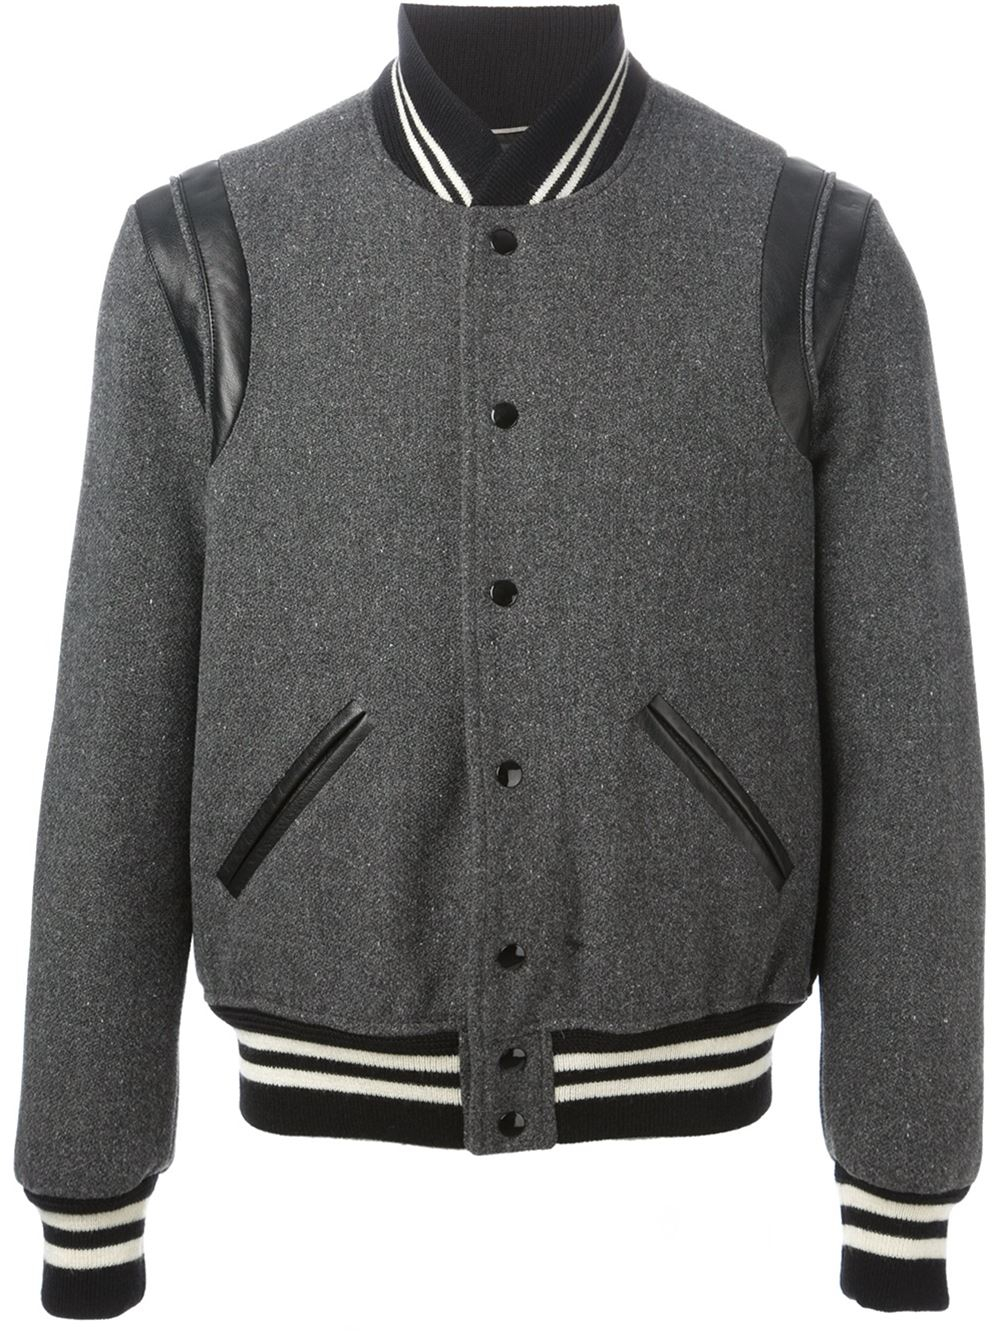 Lyst - Saint Laurent Varsity Jacket in Gray for Men